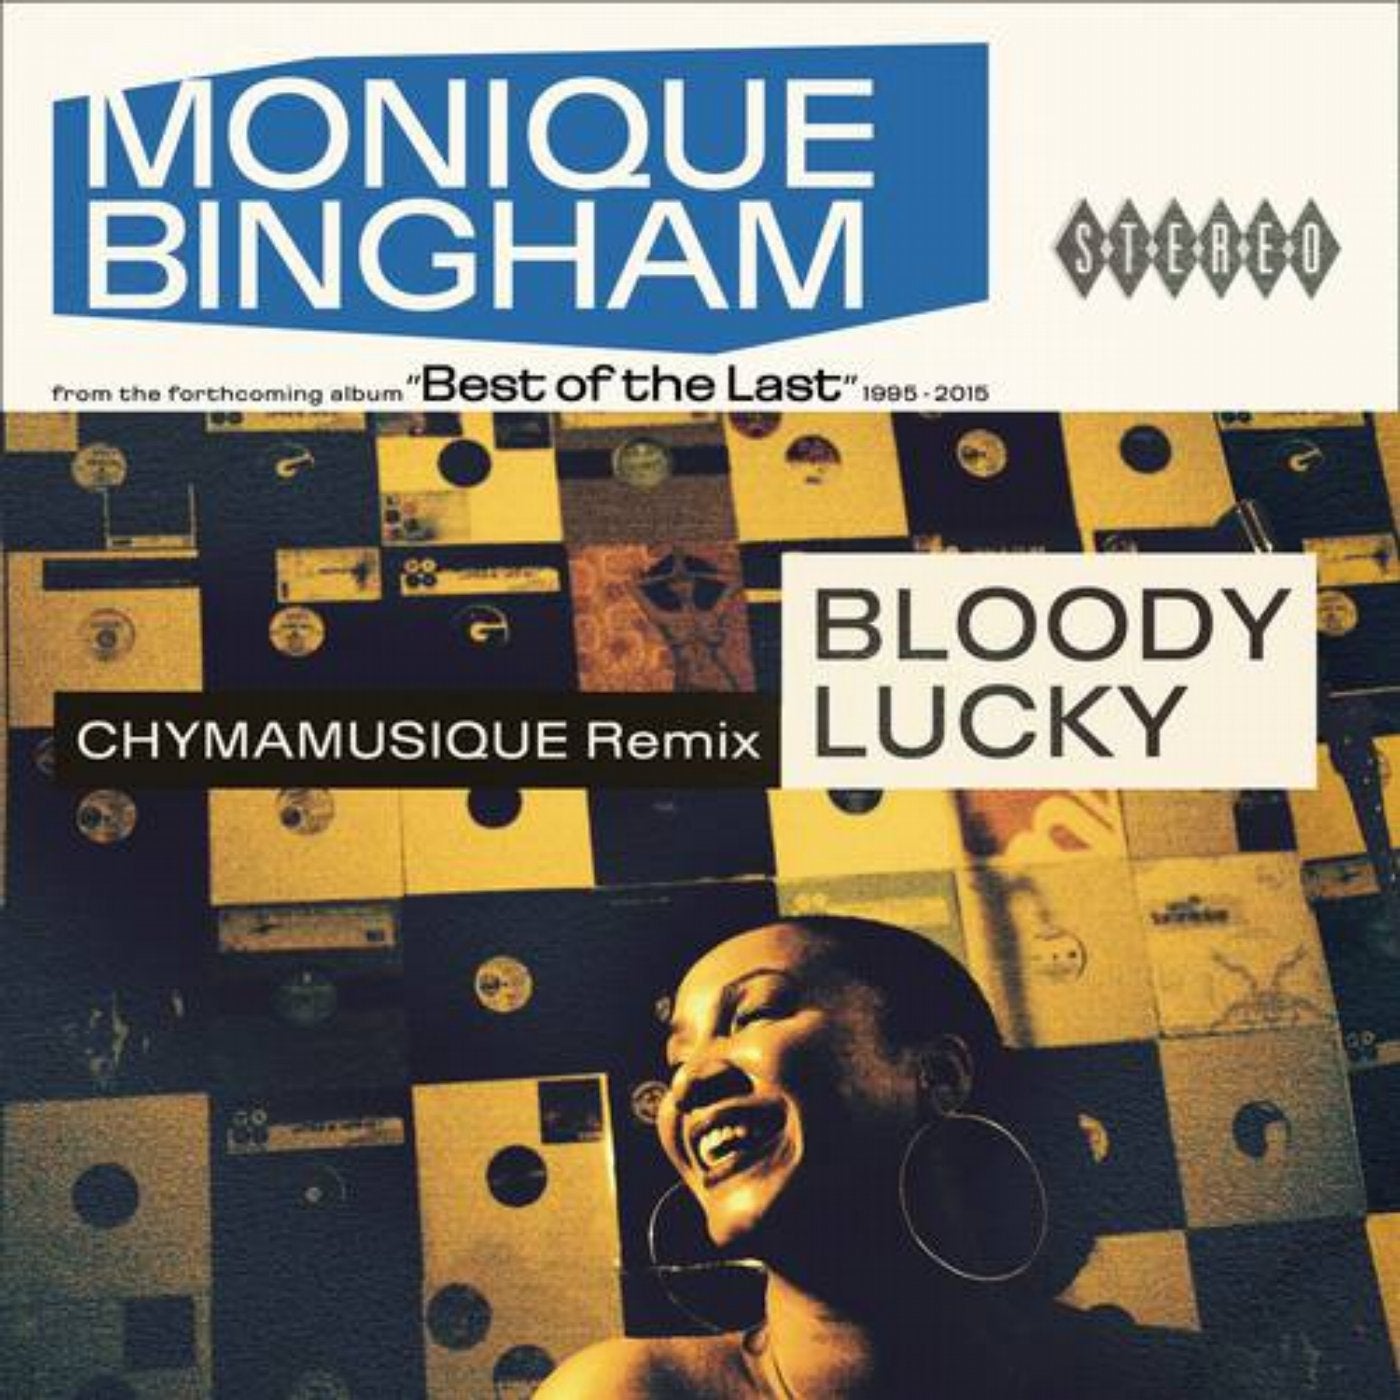 Bloody Lucky (Chymamusique Remix)